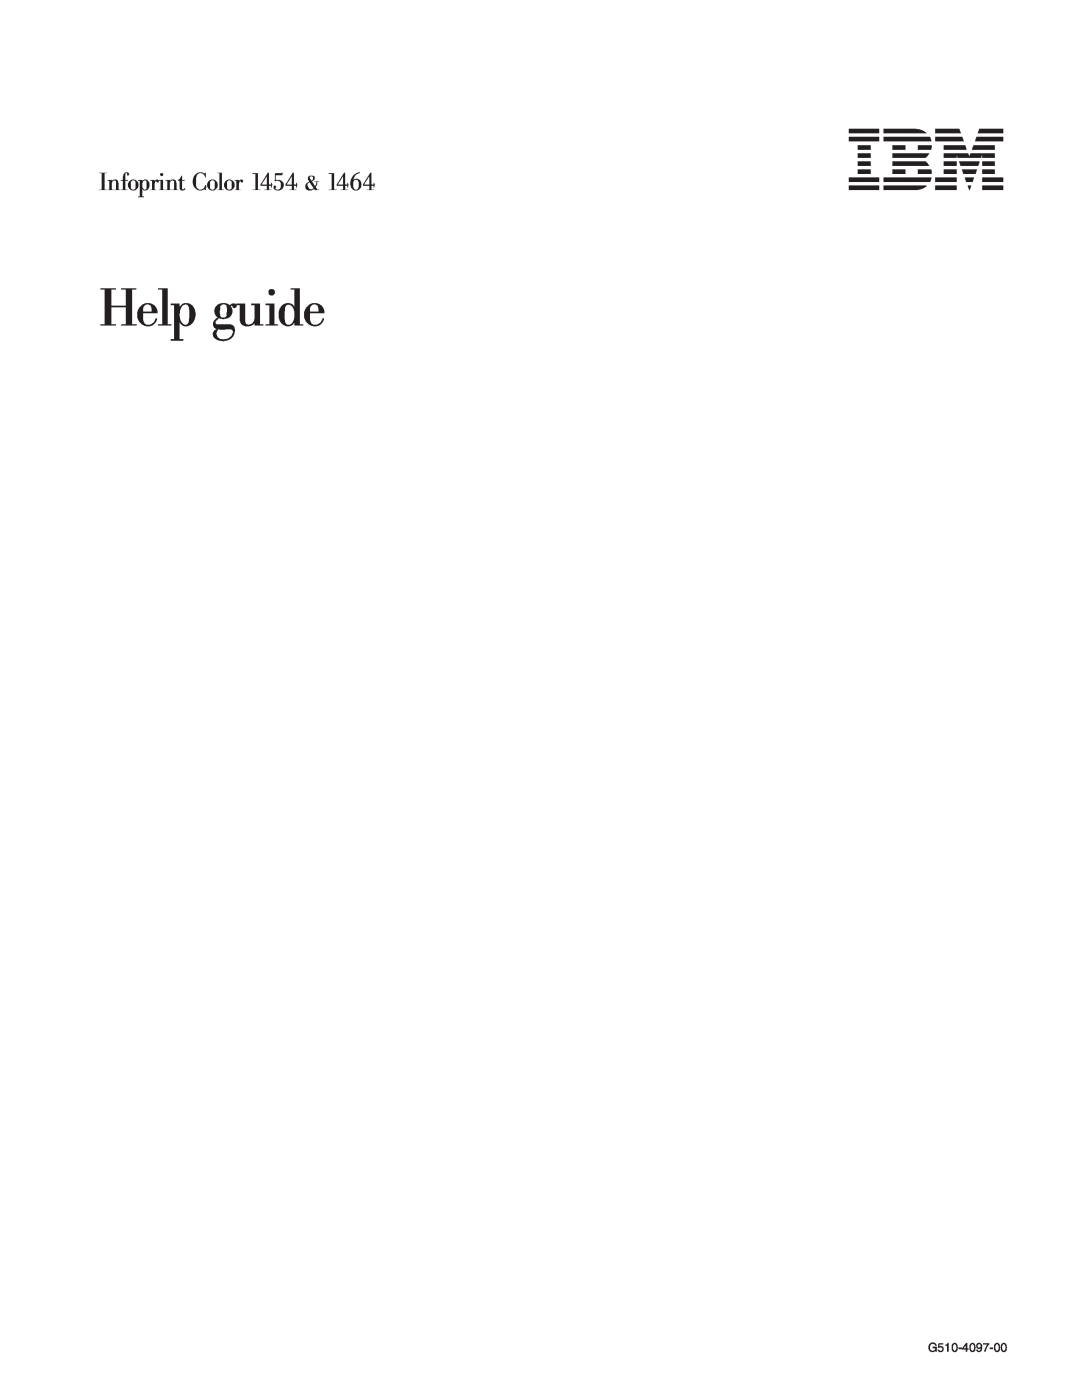 IBM 1464 manual Help guide, Infoprint Color 1454, G510-4097-00 